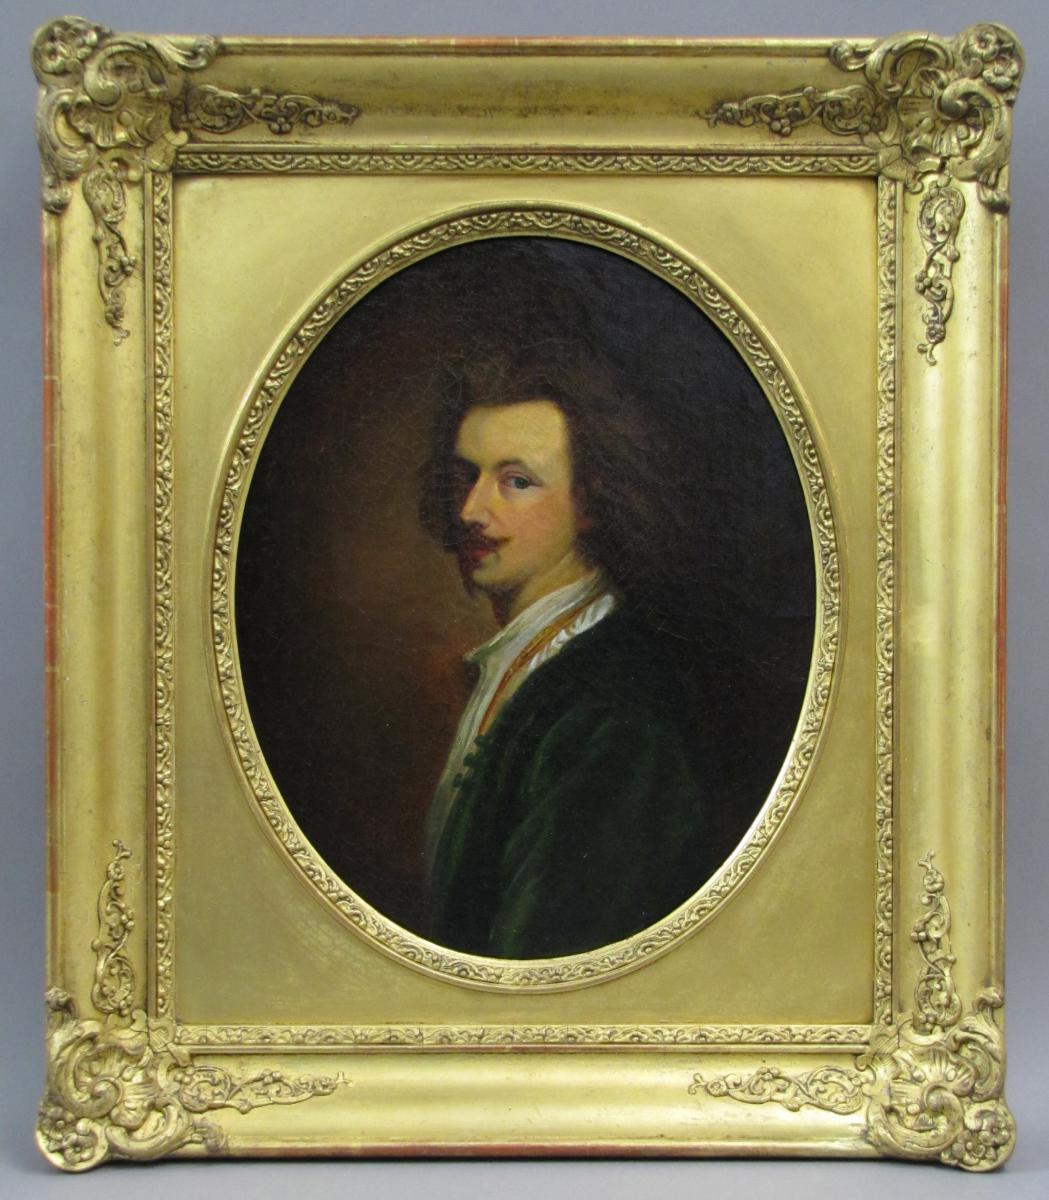 Self-portrait After Van Dyck